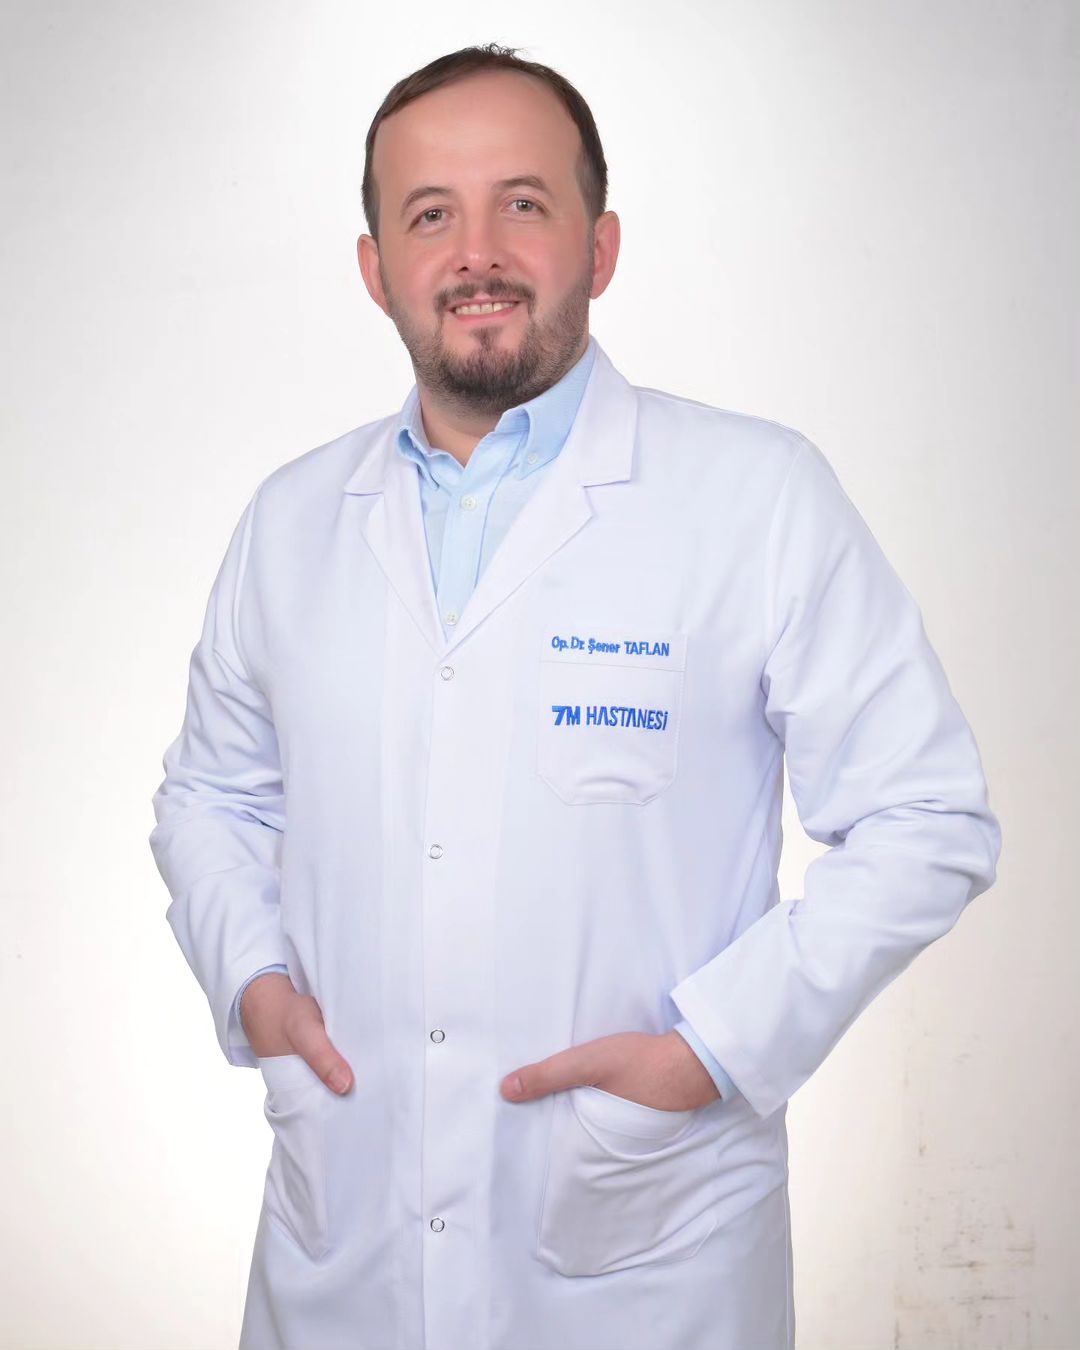 Op. Dr. Şener TAFLAN